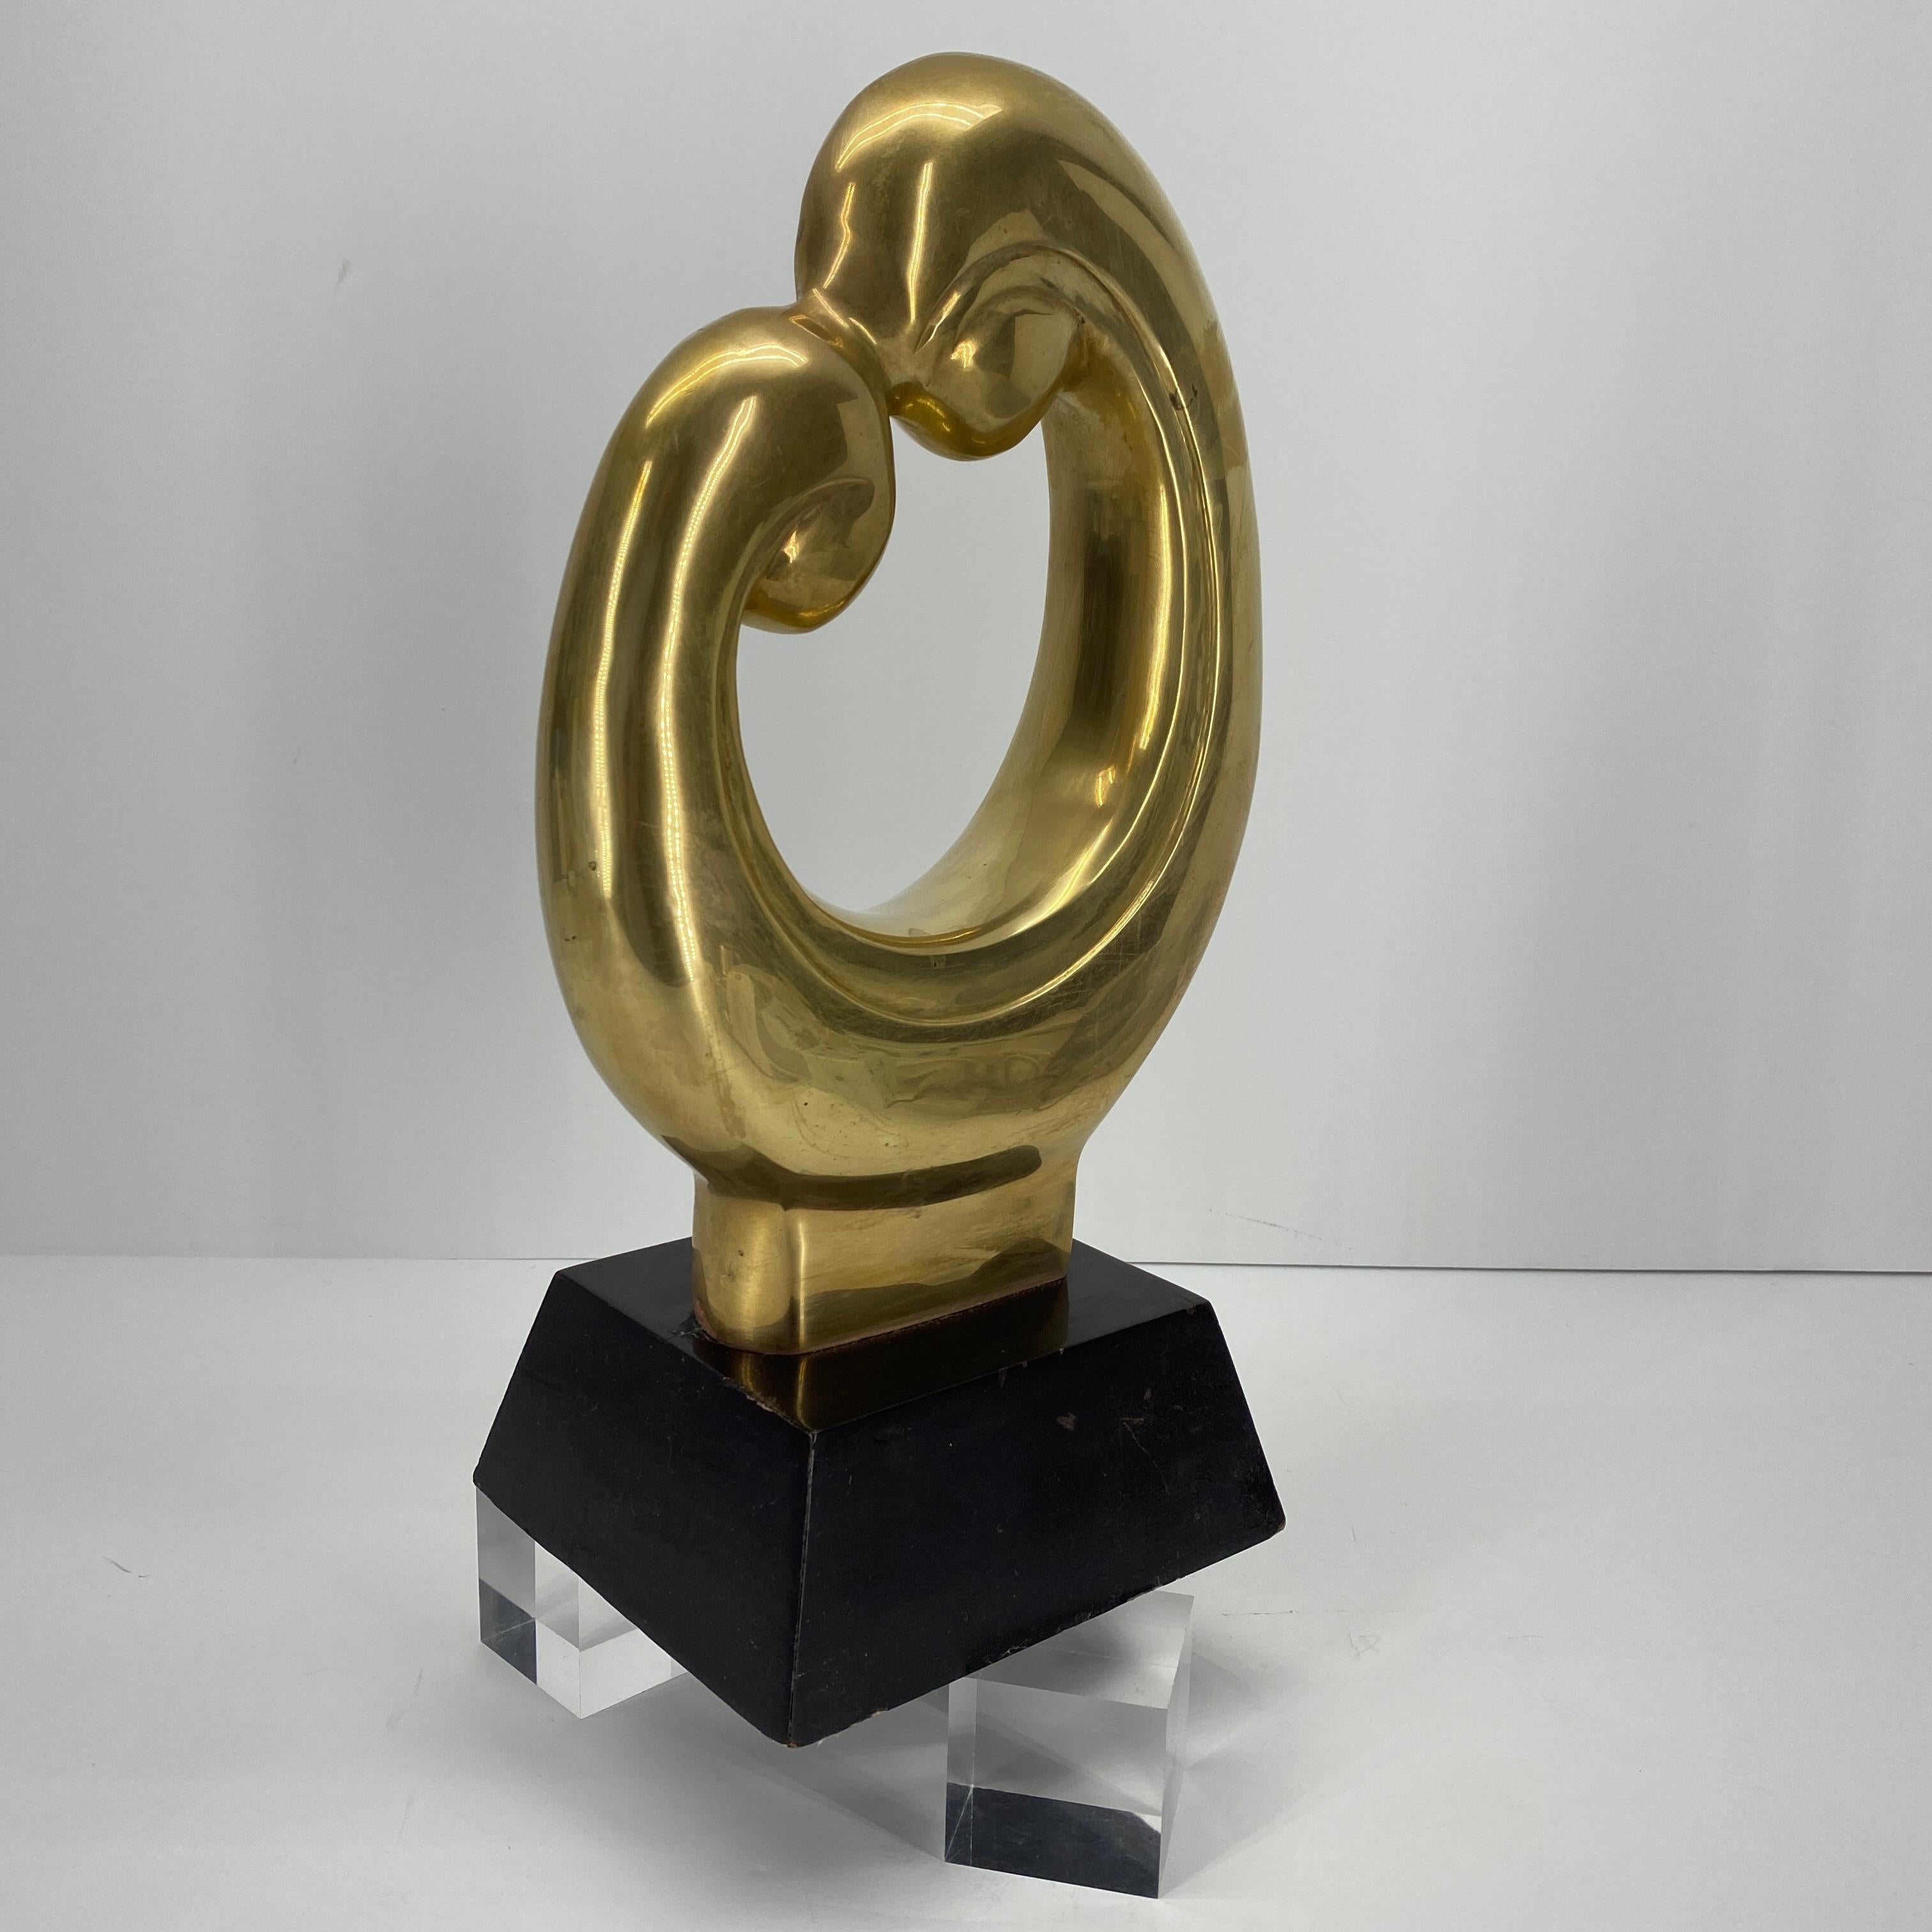 American Mid-Century Modern Brass Sculpture On Wooden Stand